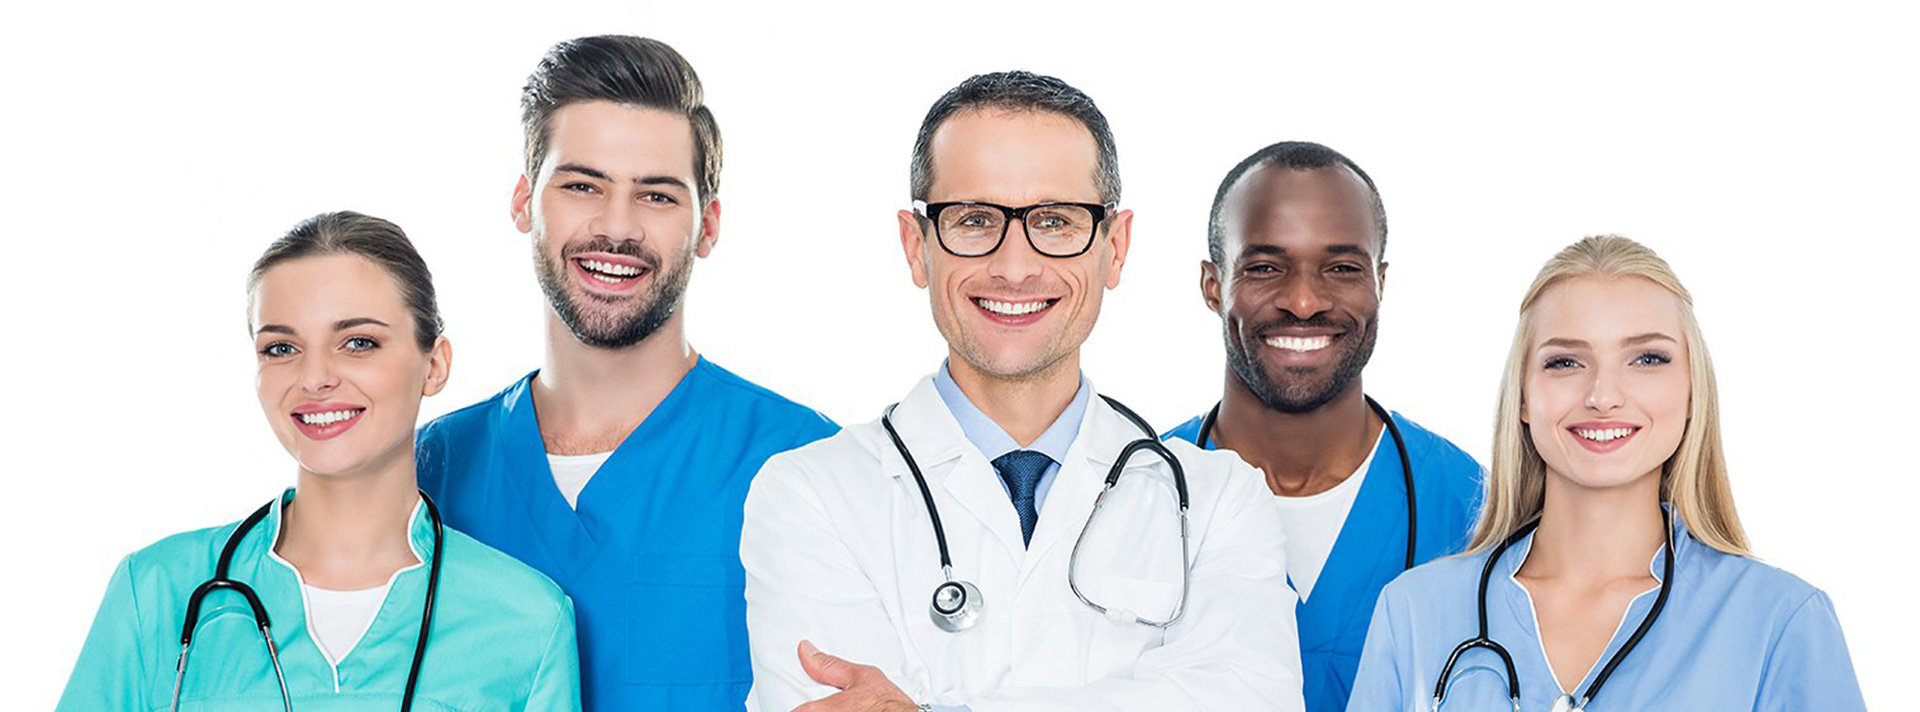 Medical Marijuana Doctors in Boca Raton, Florida 33429